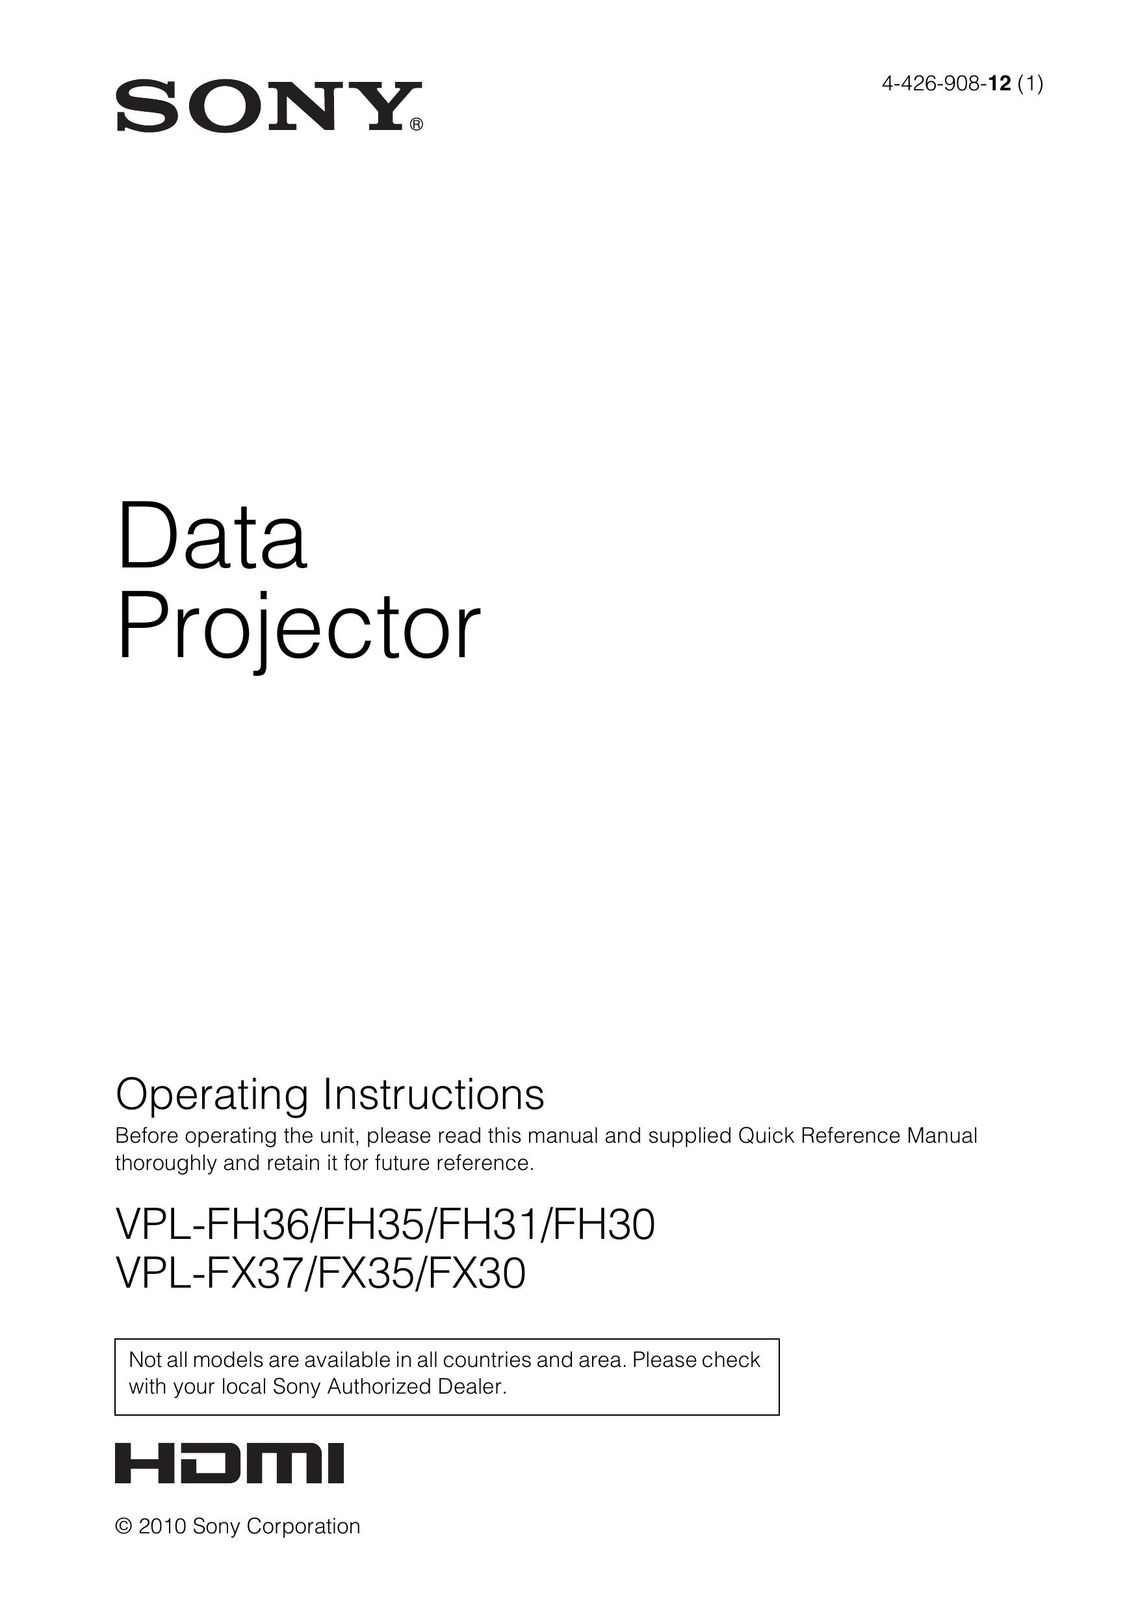 Sony FH30 VPL-FX37 Projector User Manual